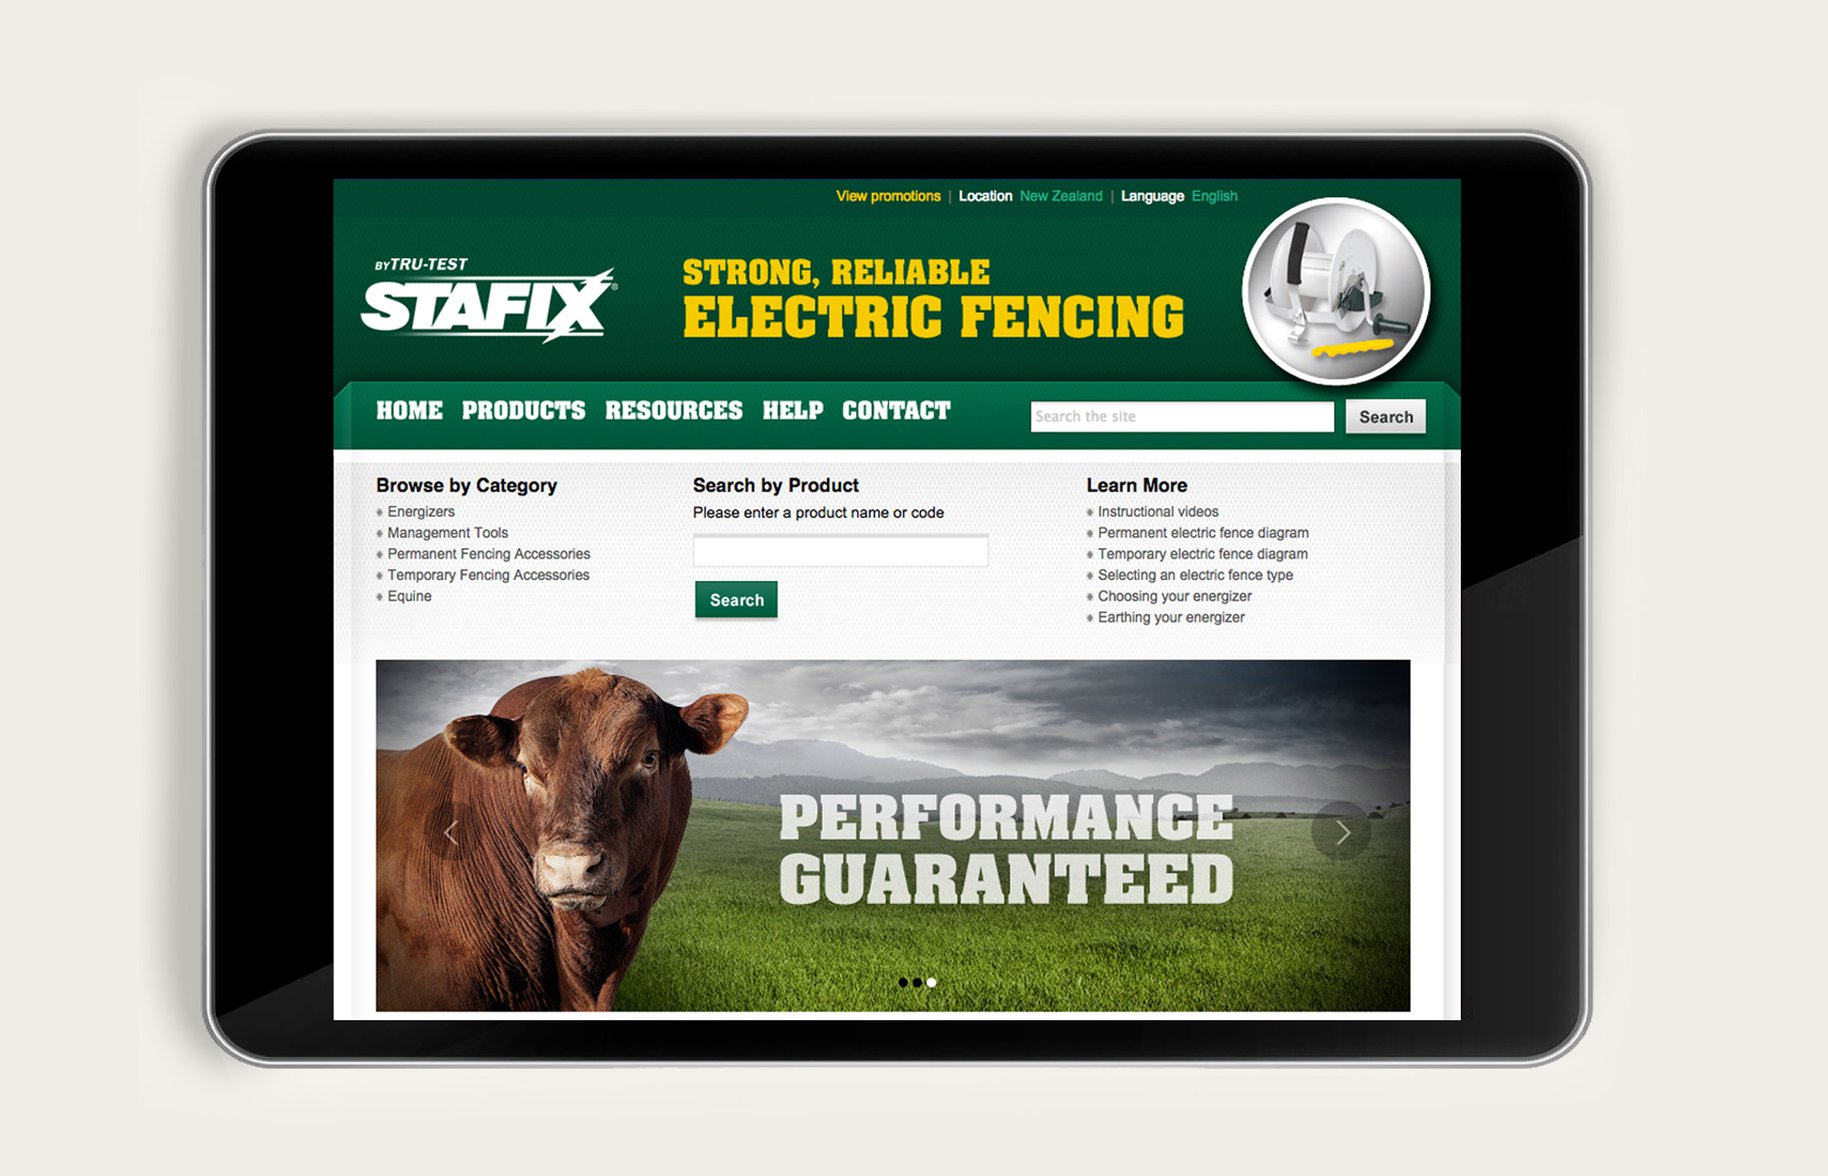 Stafix iPad website design